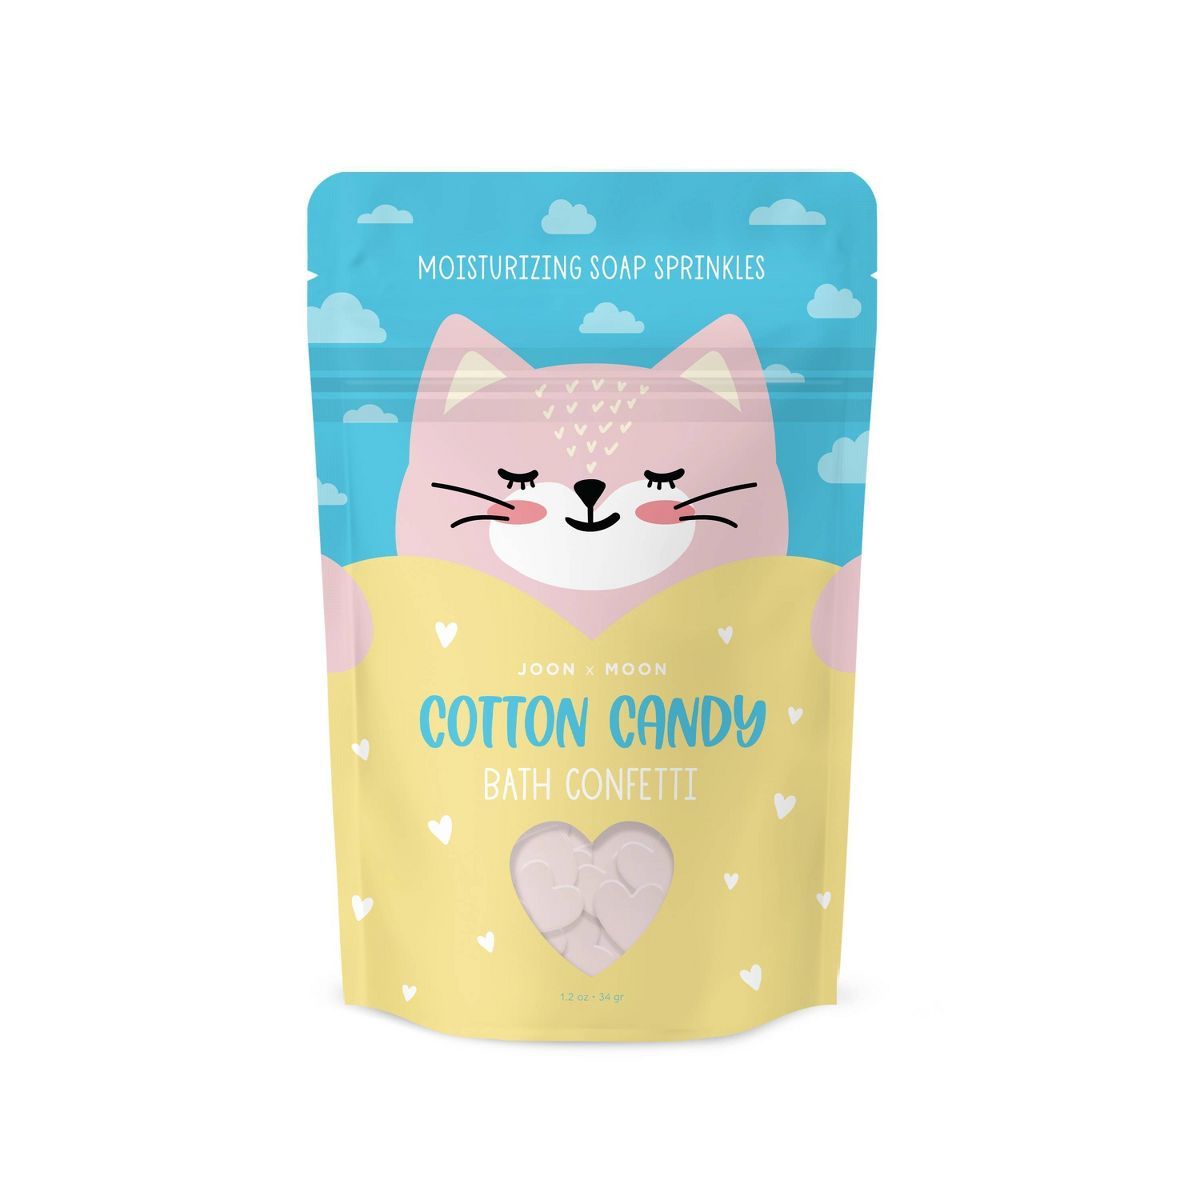 Joon X Moon Cotton Candy Bath Confetti - 1.2oz | Target